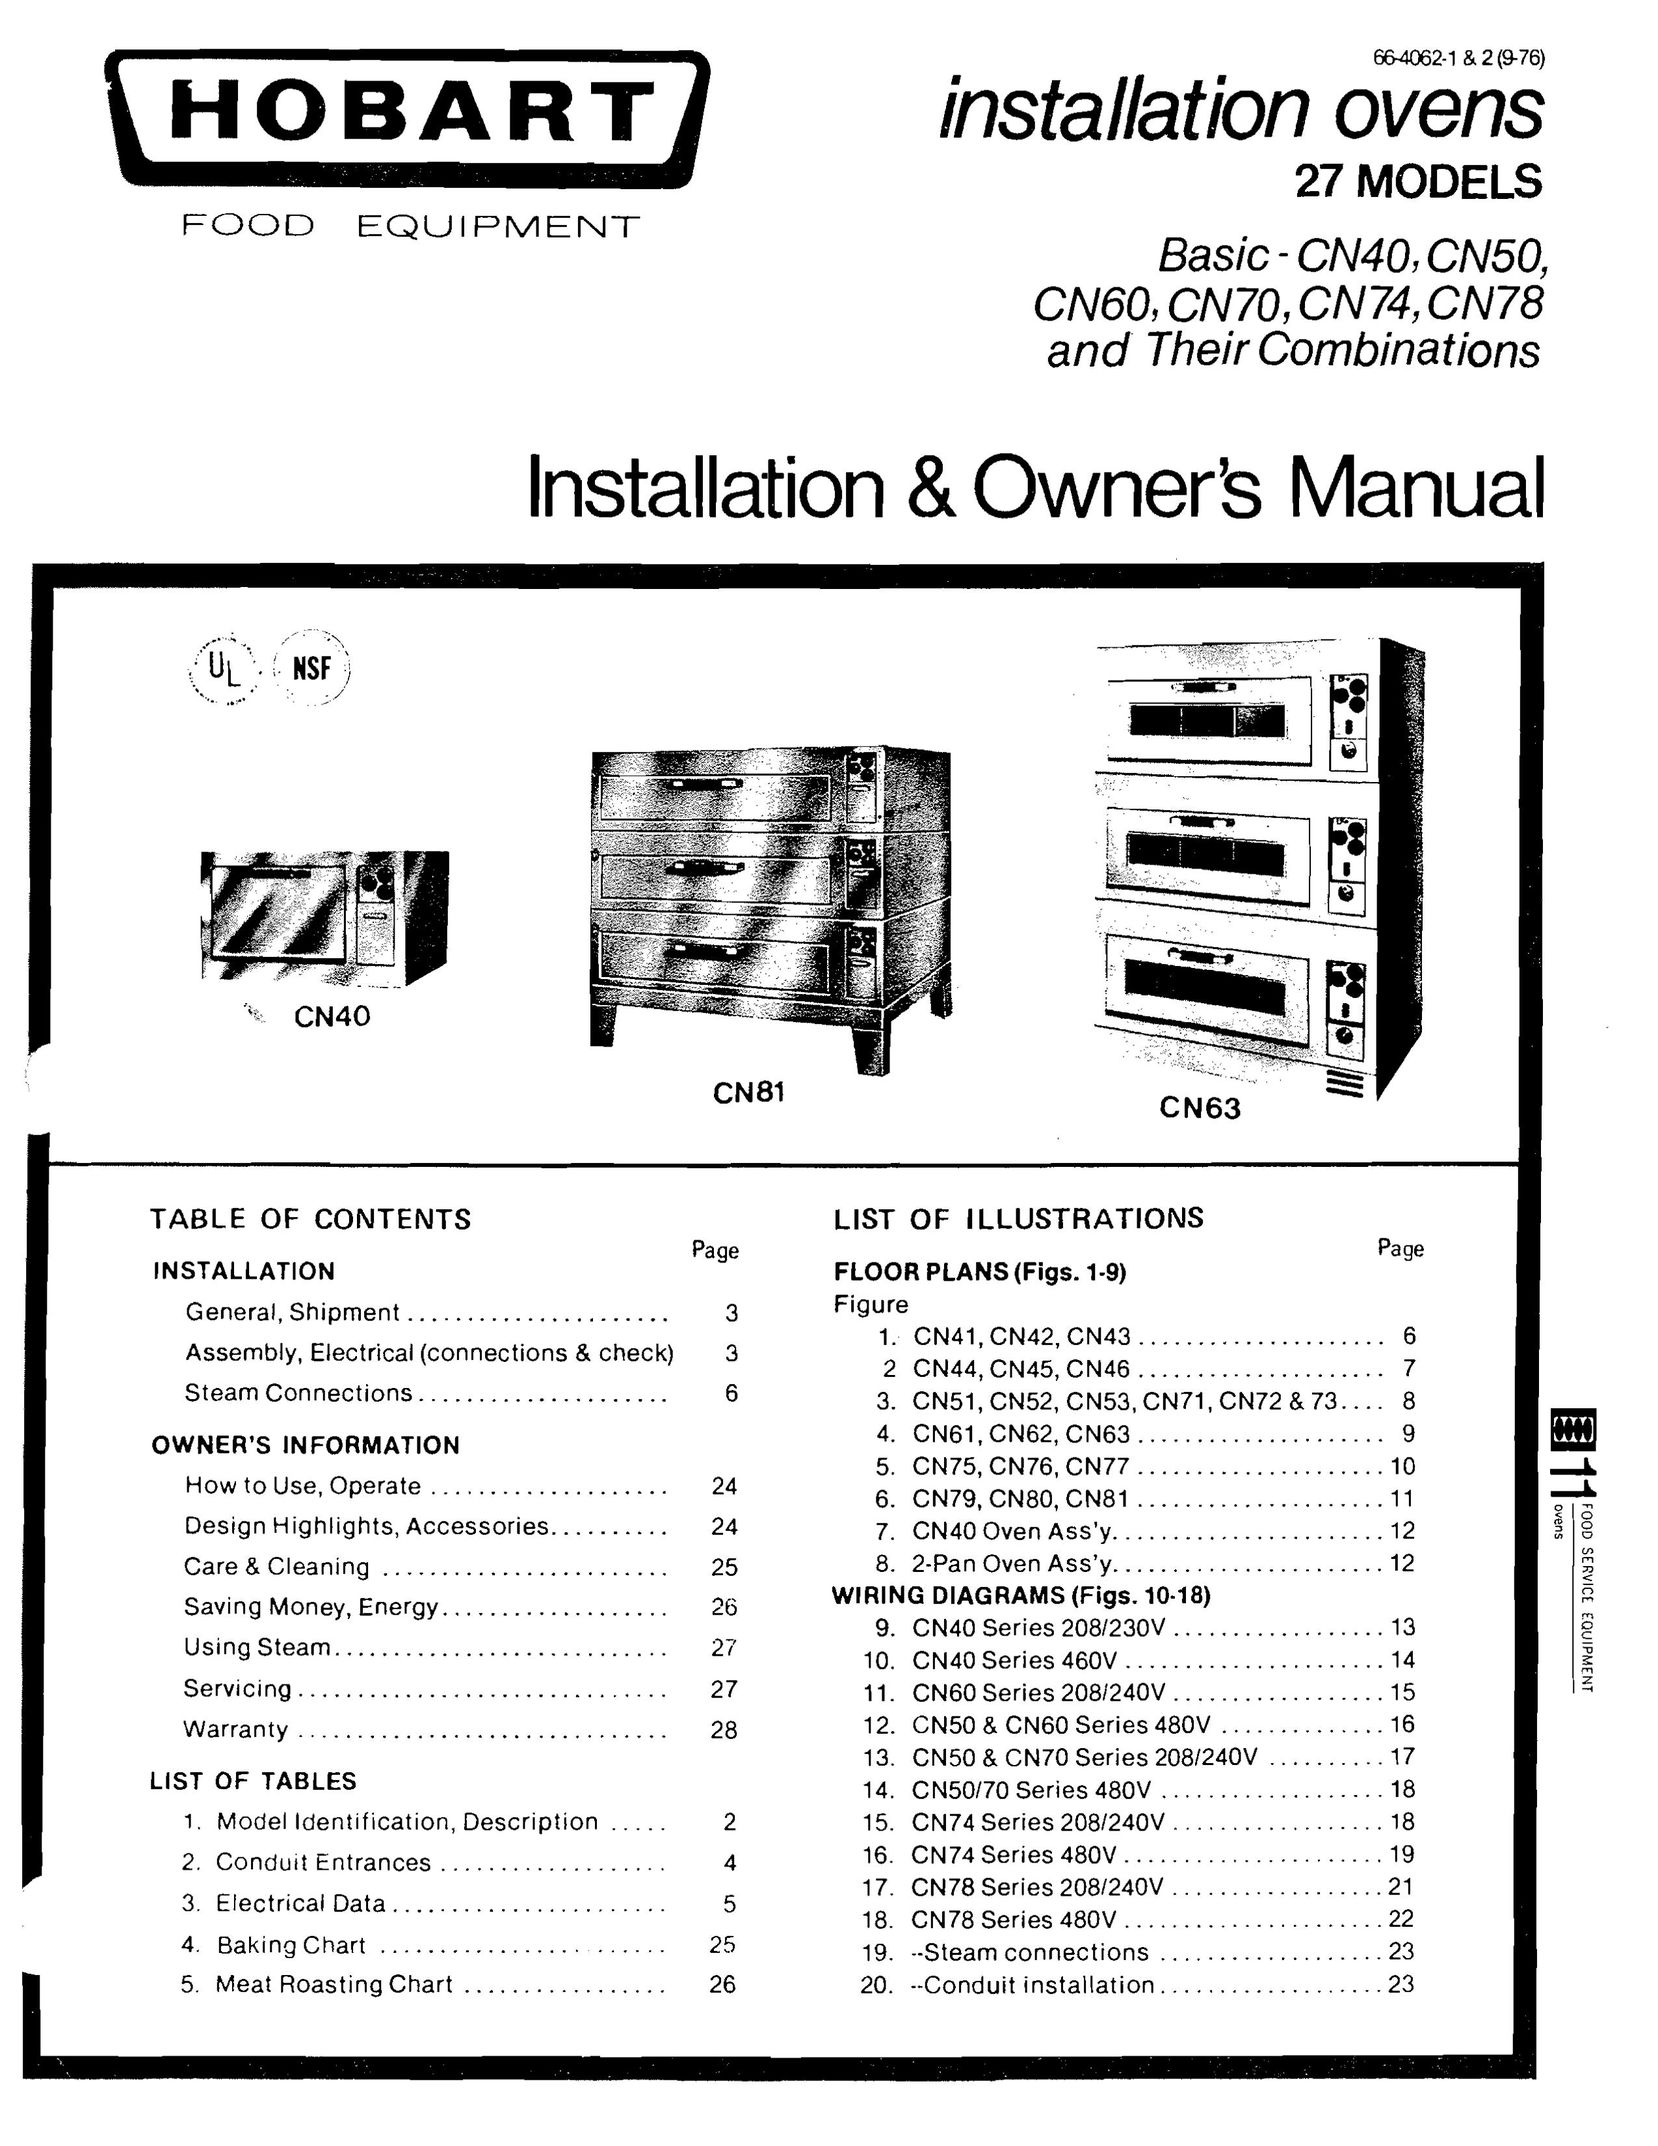 Hobart CN70 Double Oven User Manual